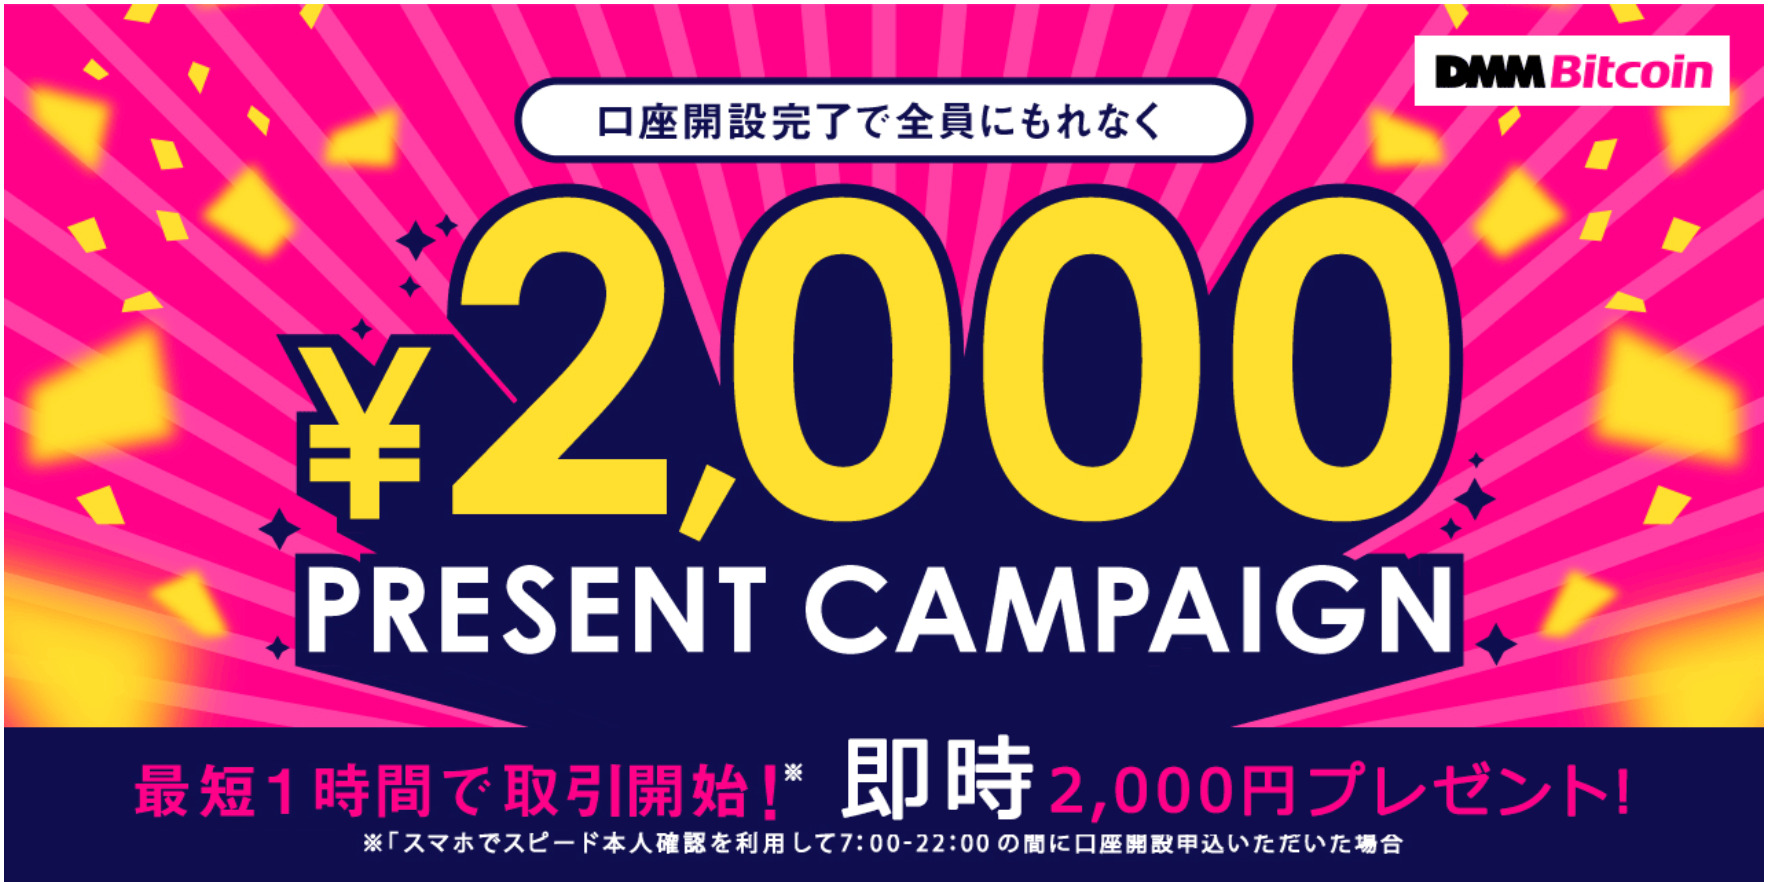 DMM Bitcoin 2000円キャンペーン